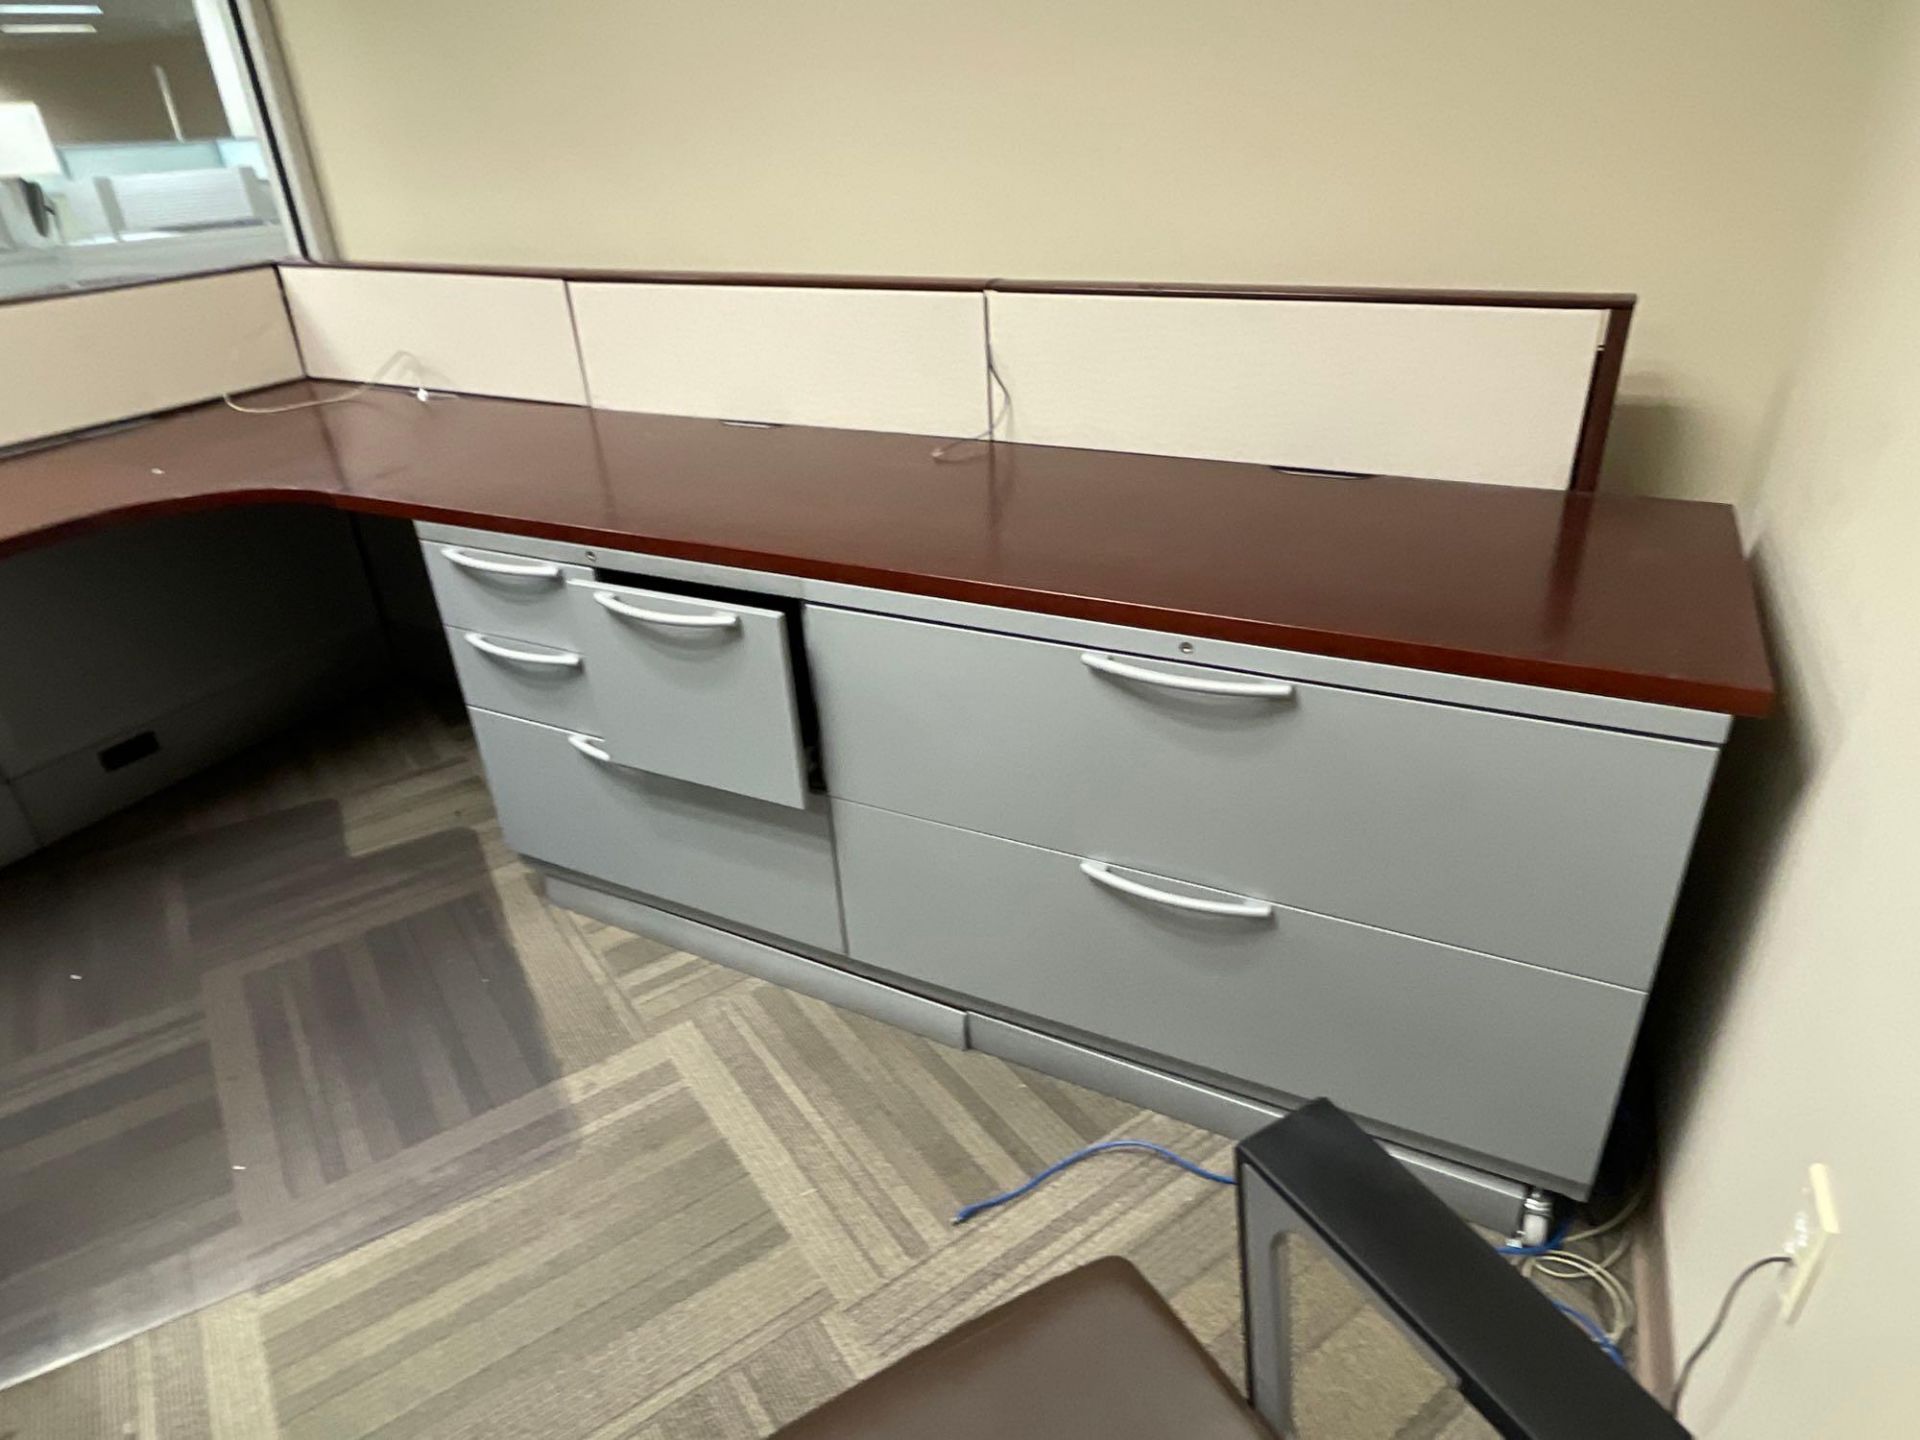 U-Shaped Laminate Desk w/ (1) 3-Drawer Box Filing Cabinet and 6-Drawer Cabinet - Image 2 of 3